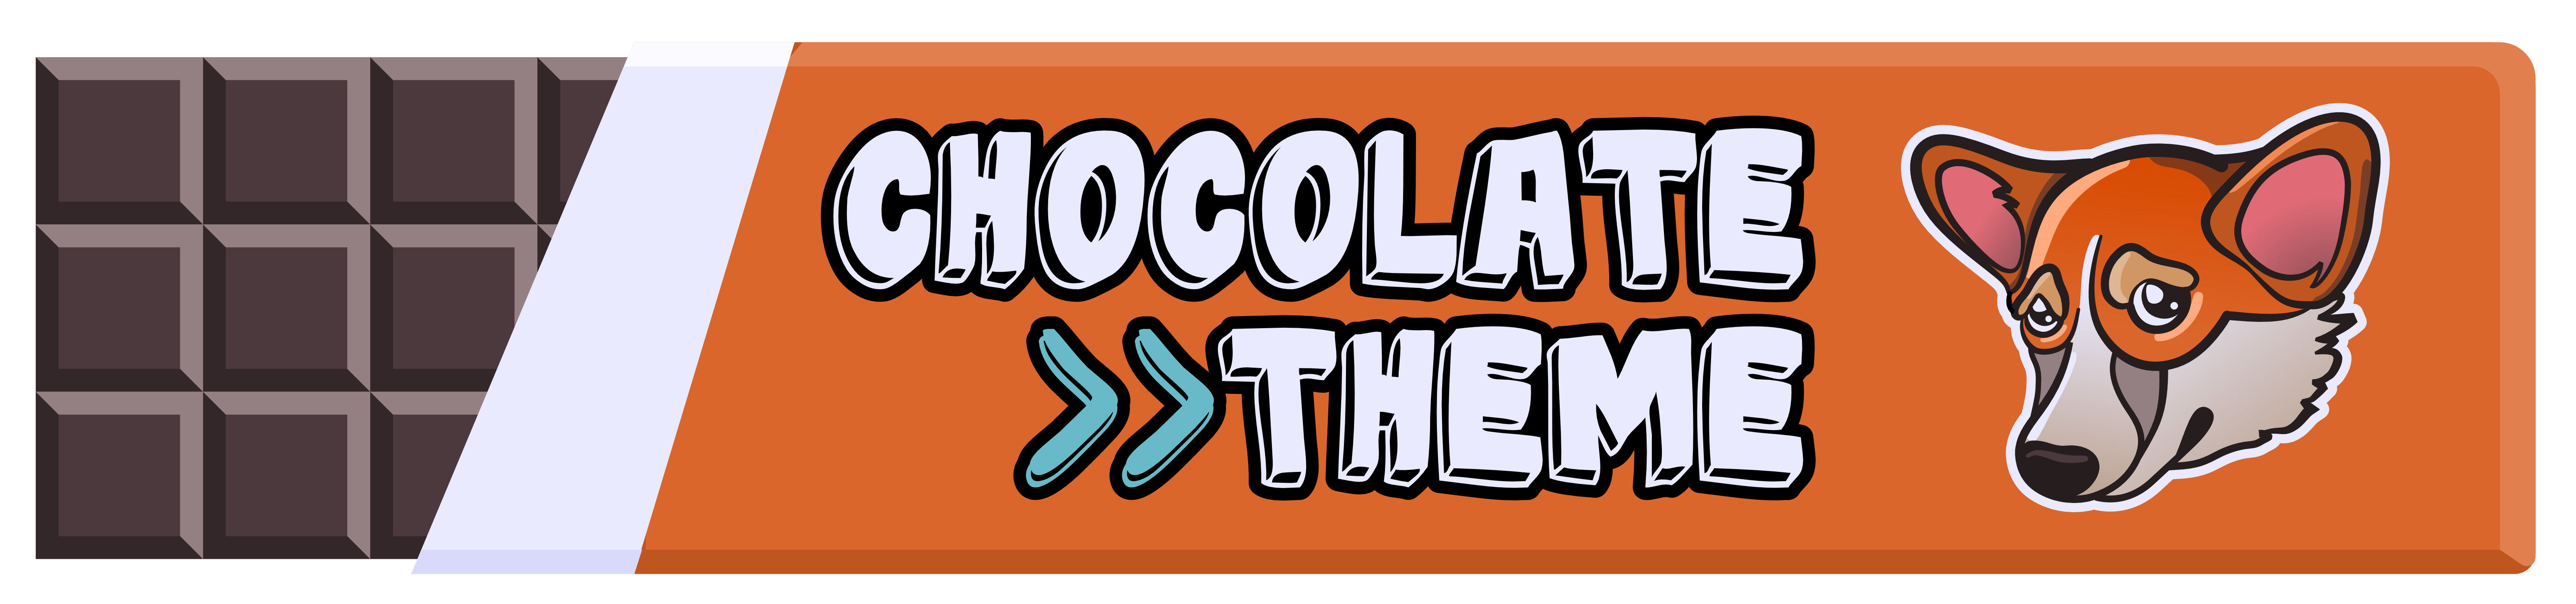 chocolate theme banner